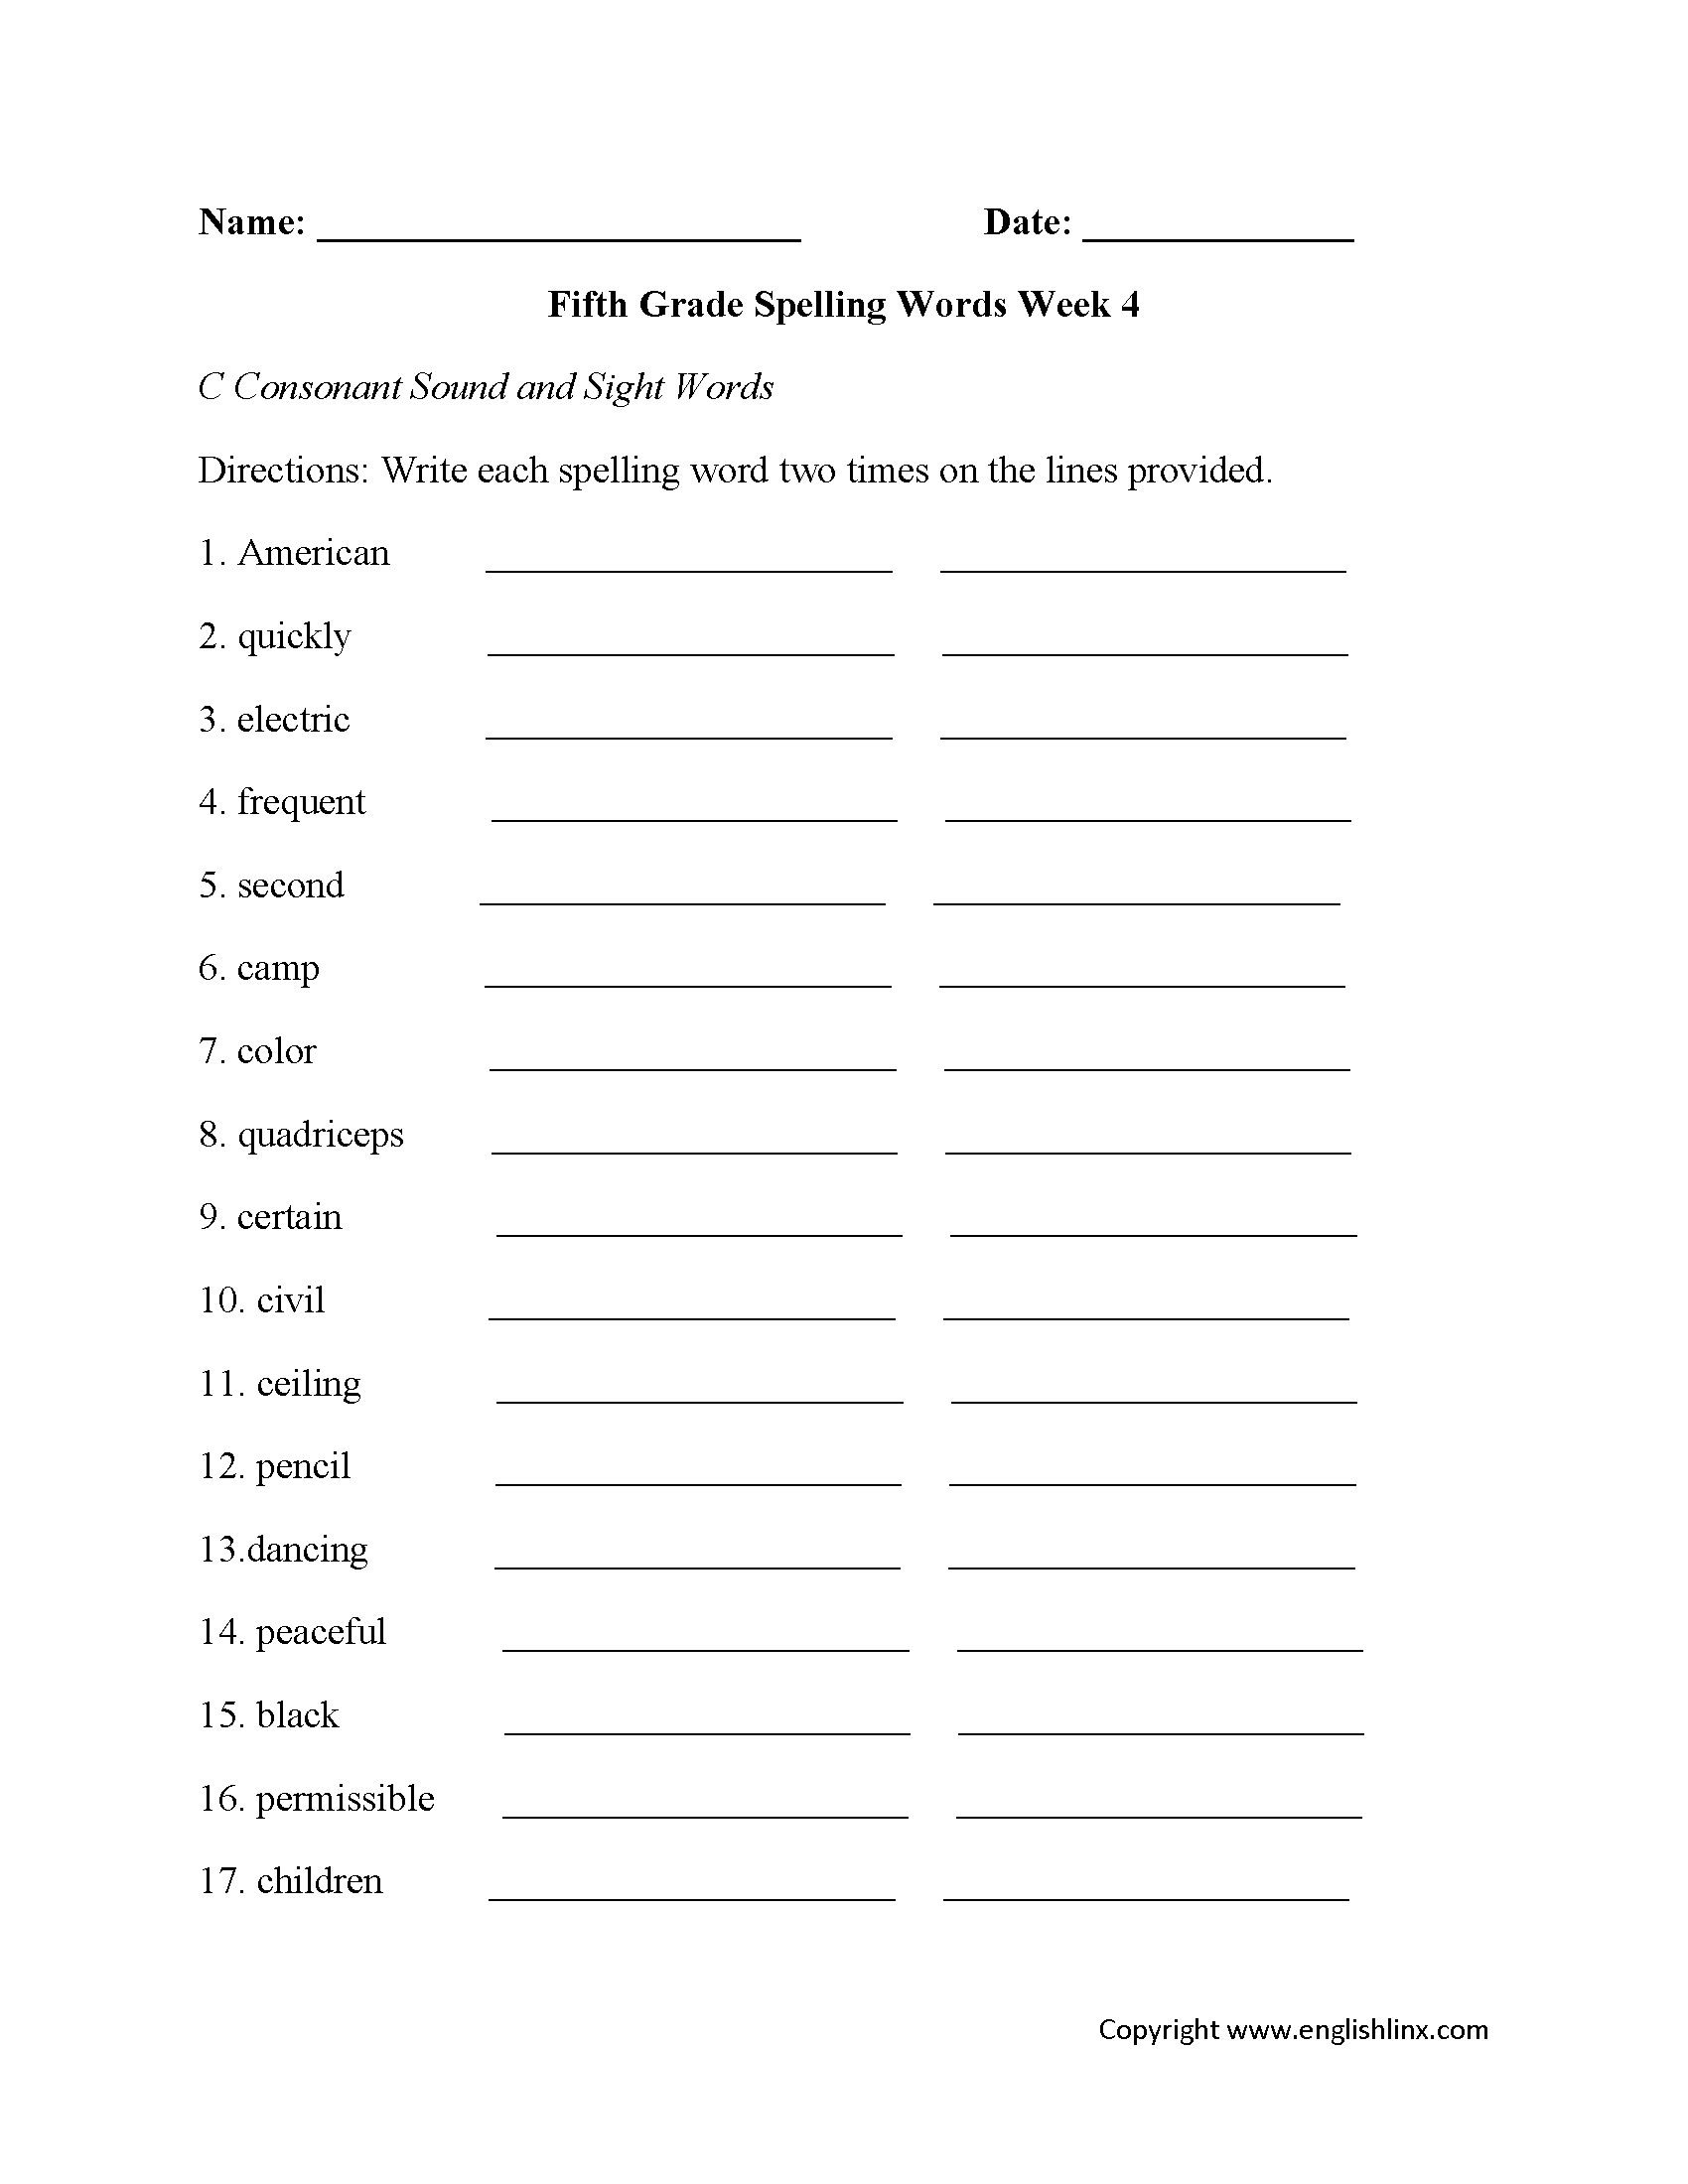 Spelling Worksheets | Fifth Grade Spelling Worksheets - Free Printable Phonics Worksheets For 4Th Grade